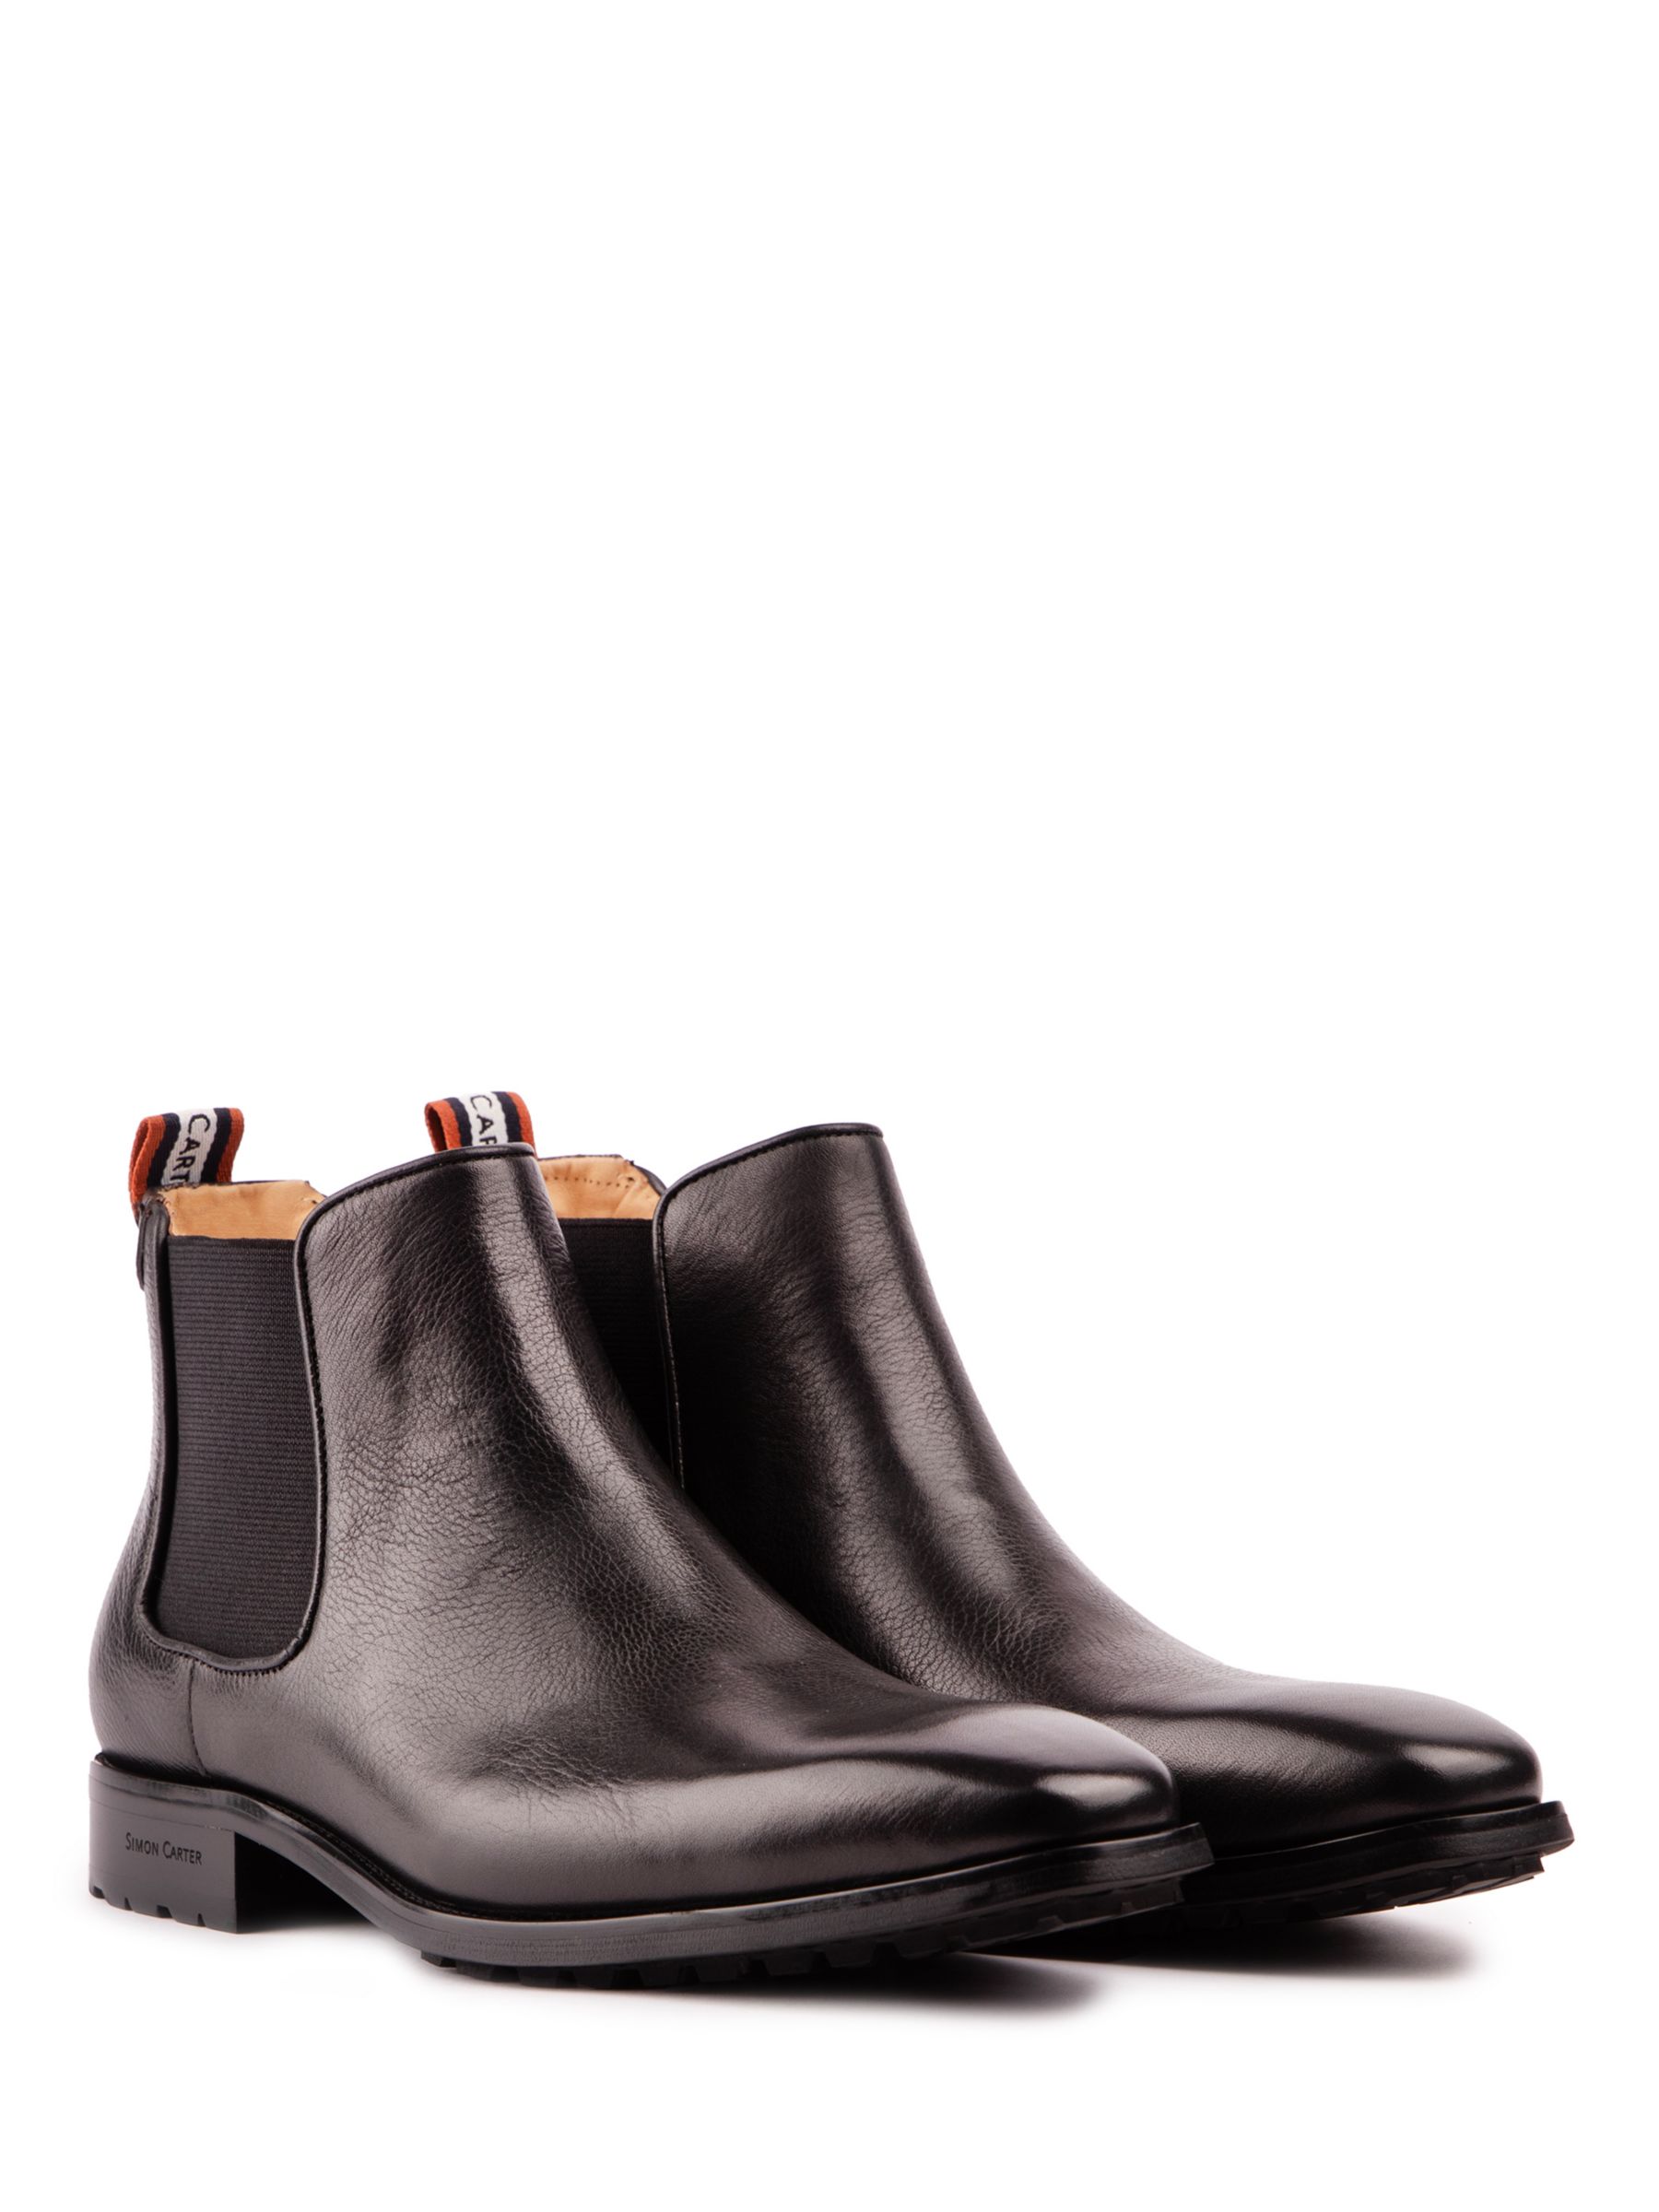 Simon Carter Clover Leather Chelsea Boots, Black, 7